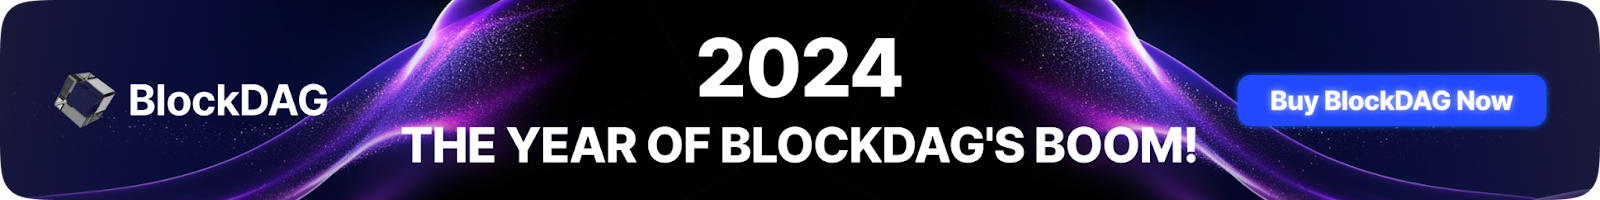 BlockDAG year